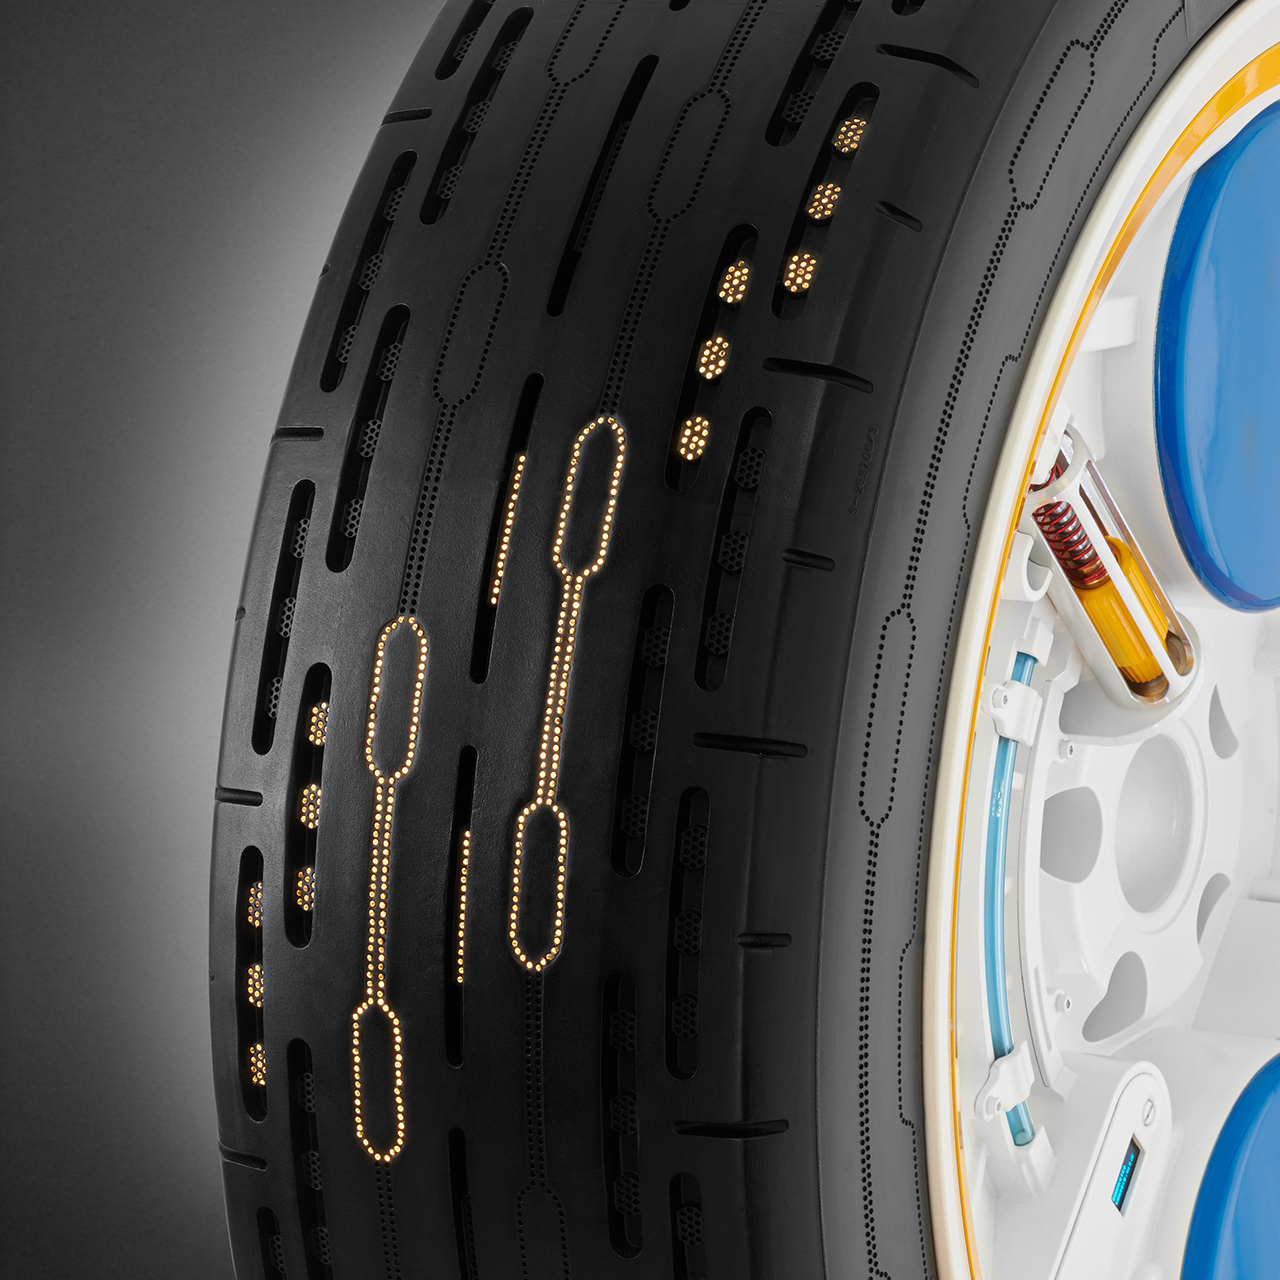 Sensors of the concept tire measure temperature, tread depth and pressure of the tire.